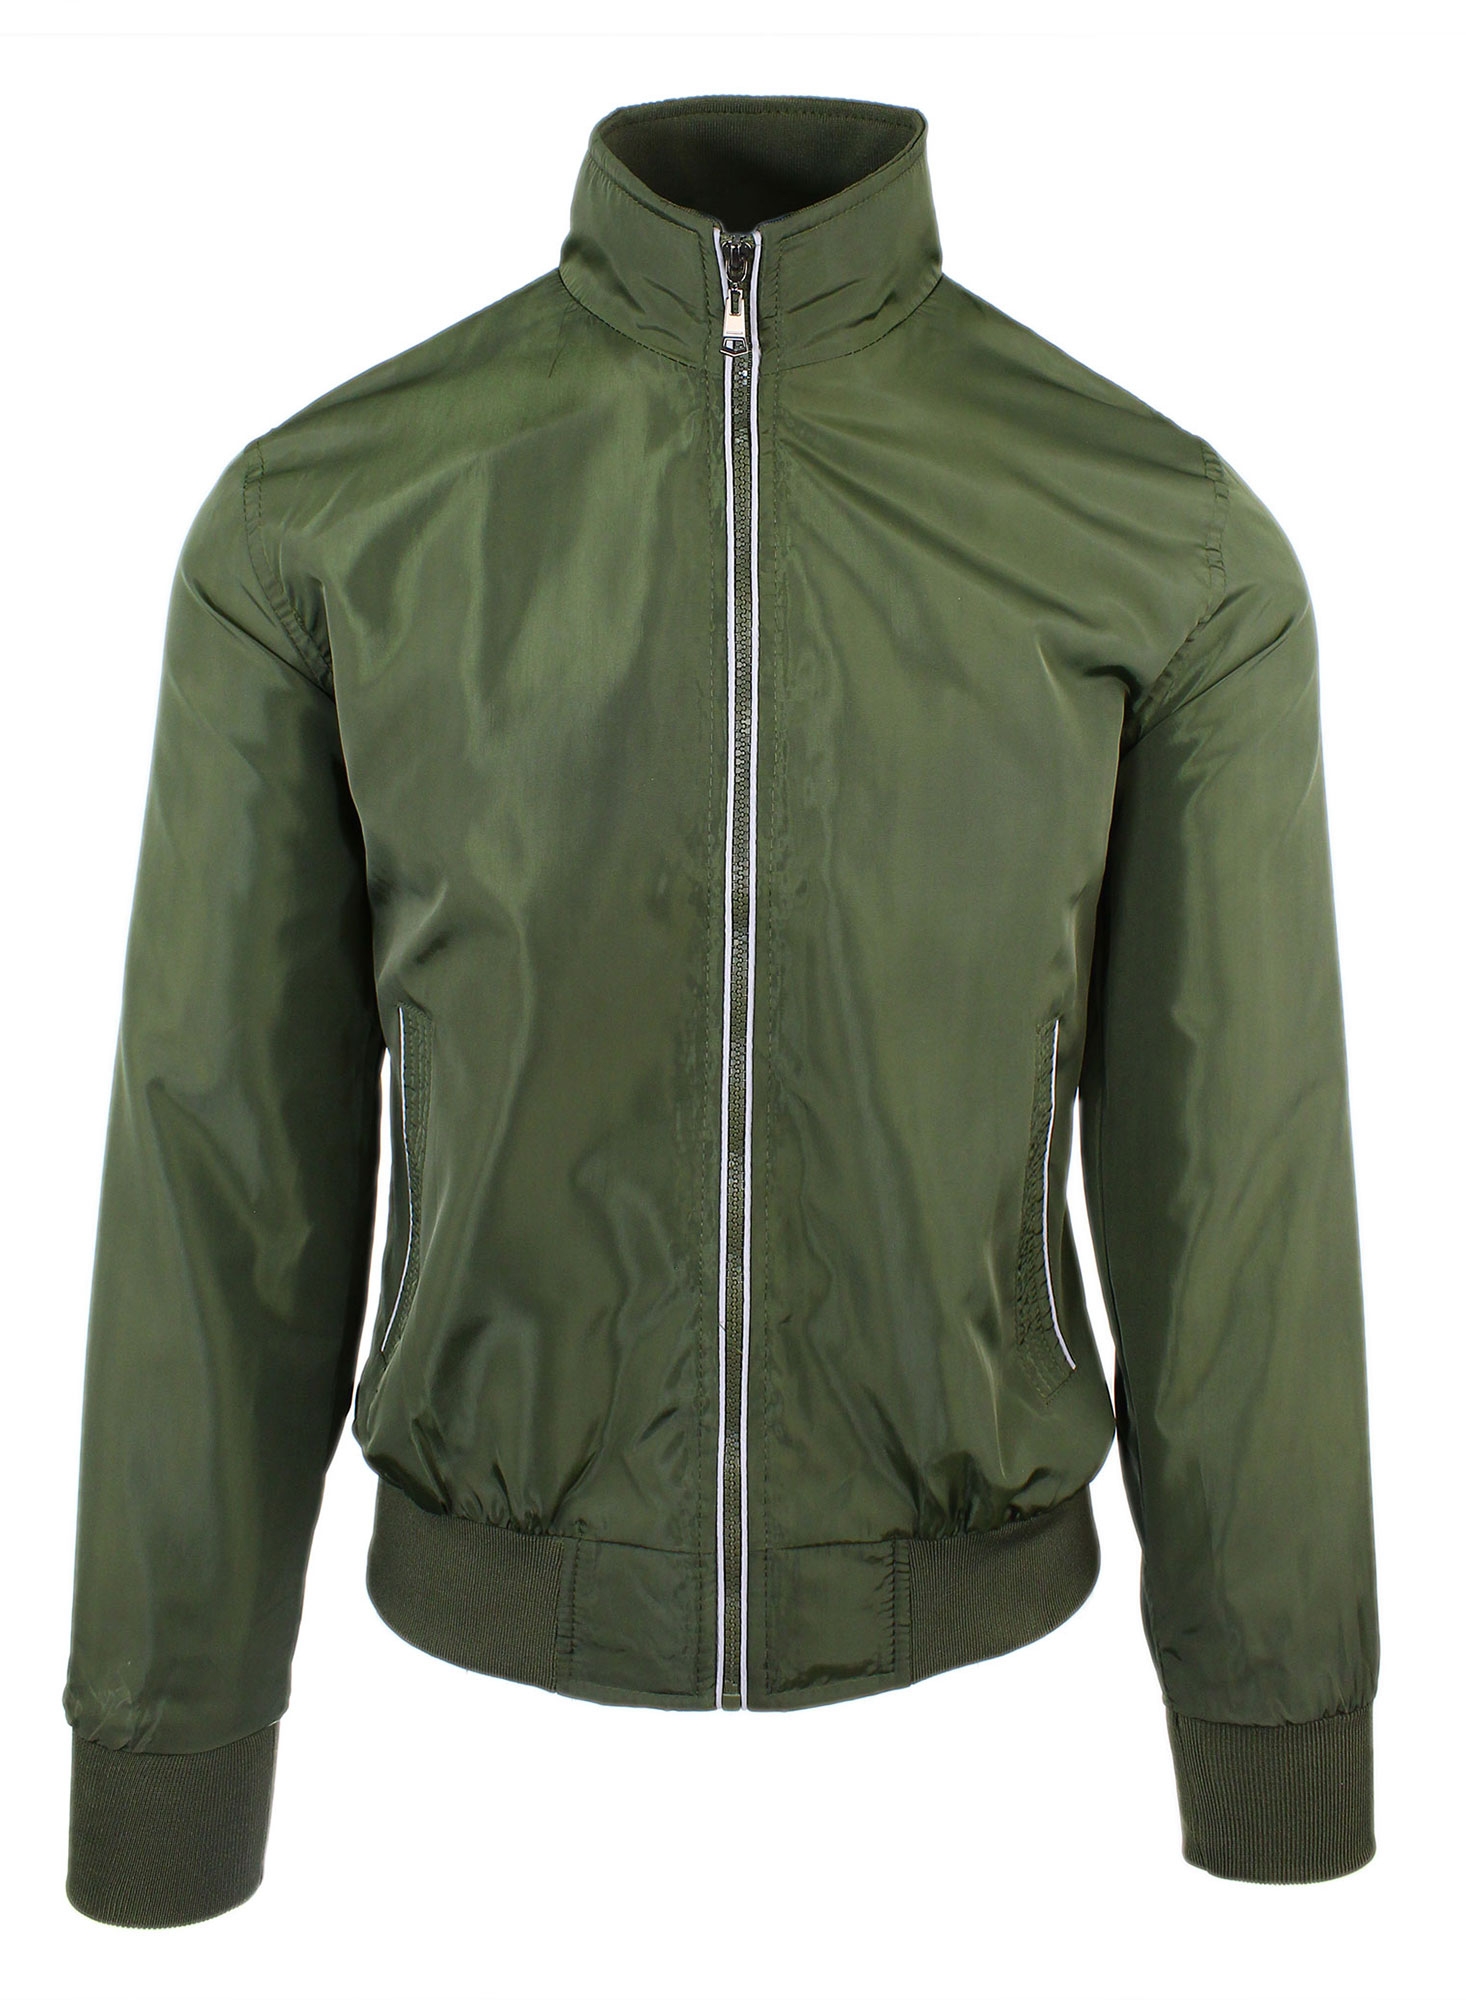 Men's Spring Slim Fit Wind Jacket Lightweight Jacket Waterproof | eBay